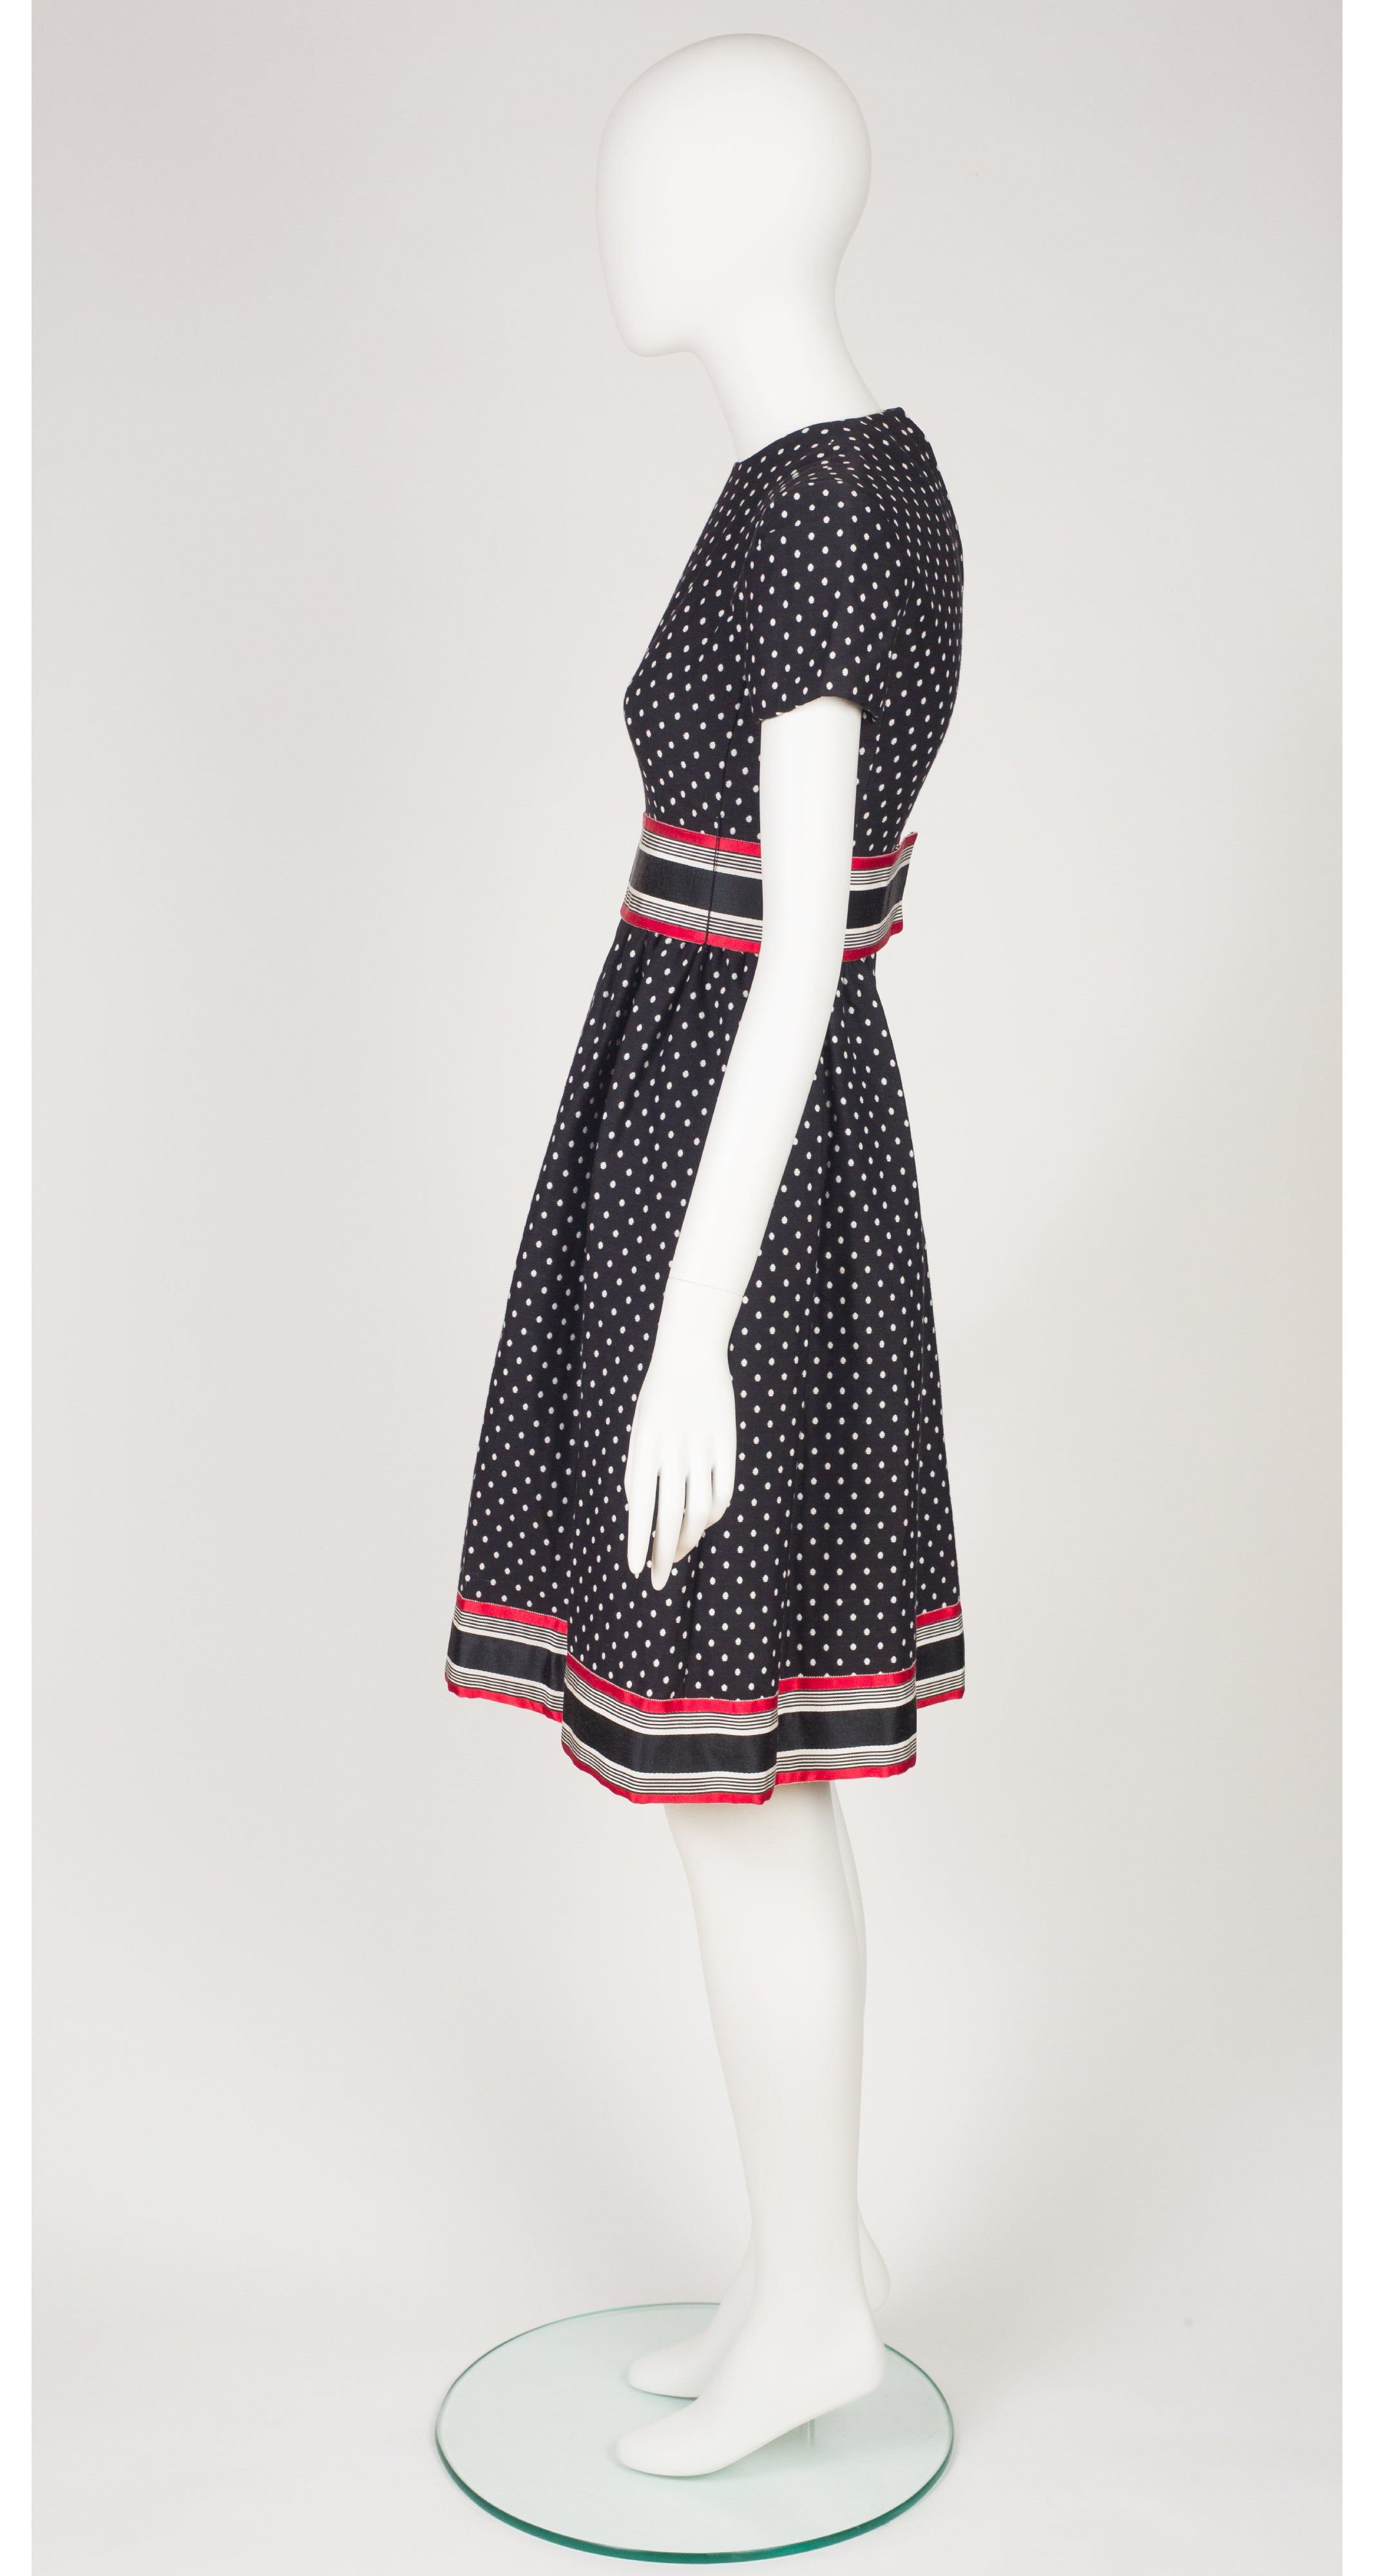 1960s Mod Polka Dot Cotton Fit & Flare Dress